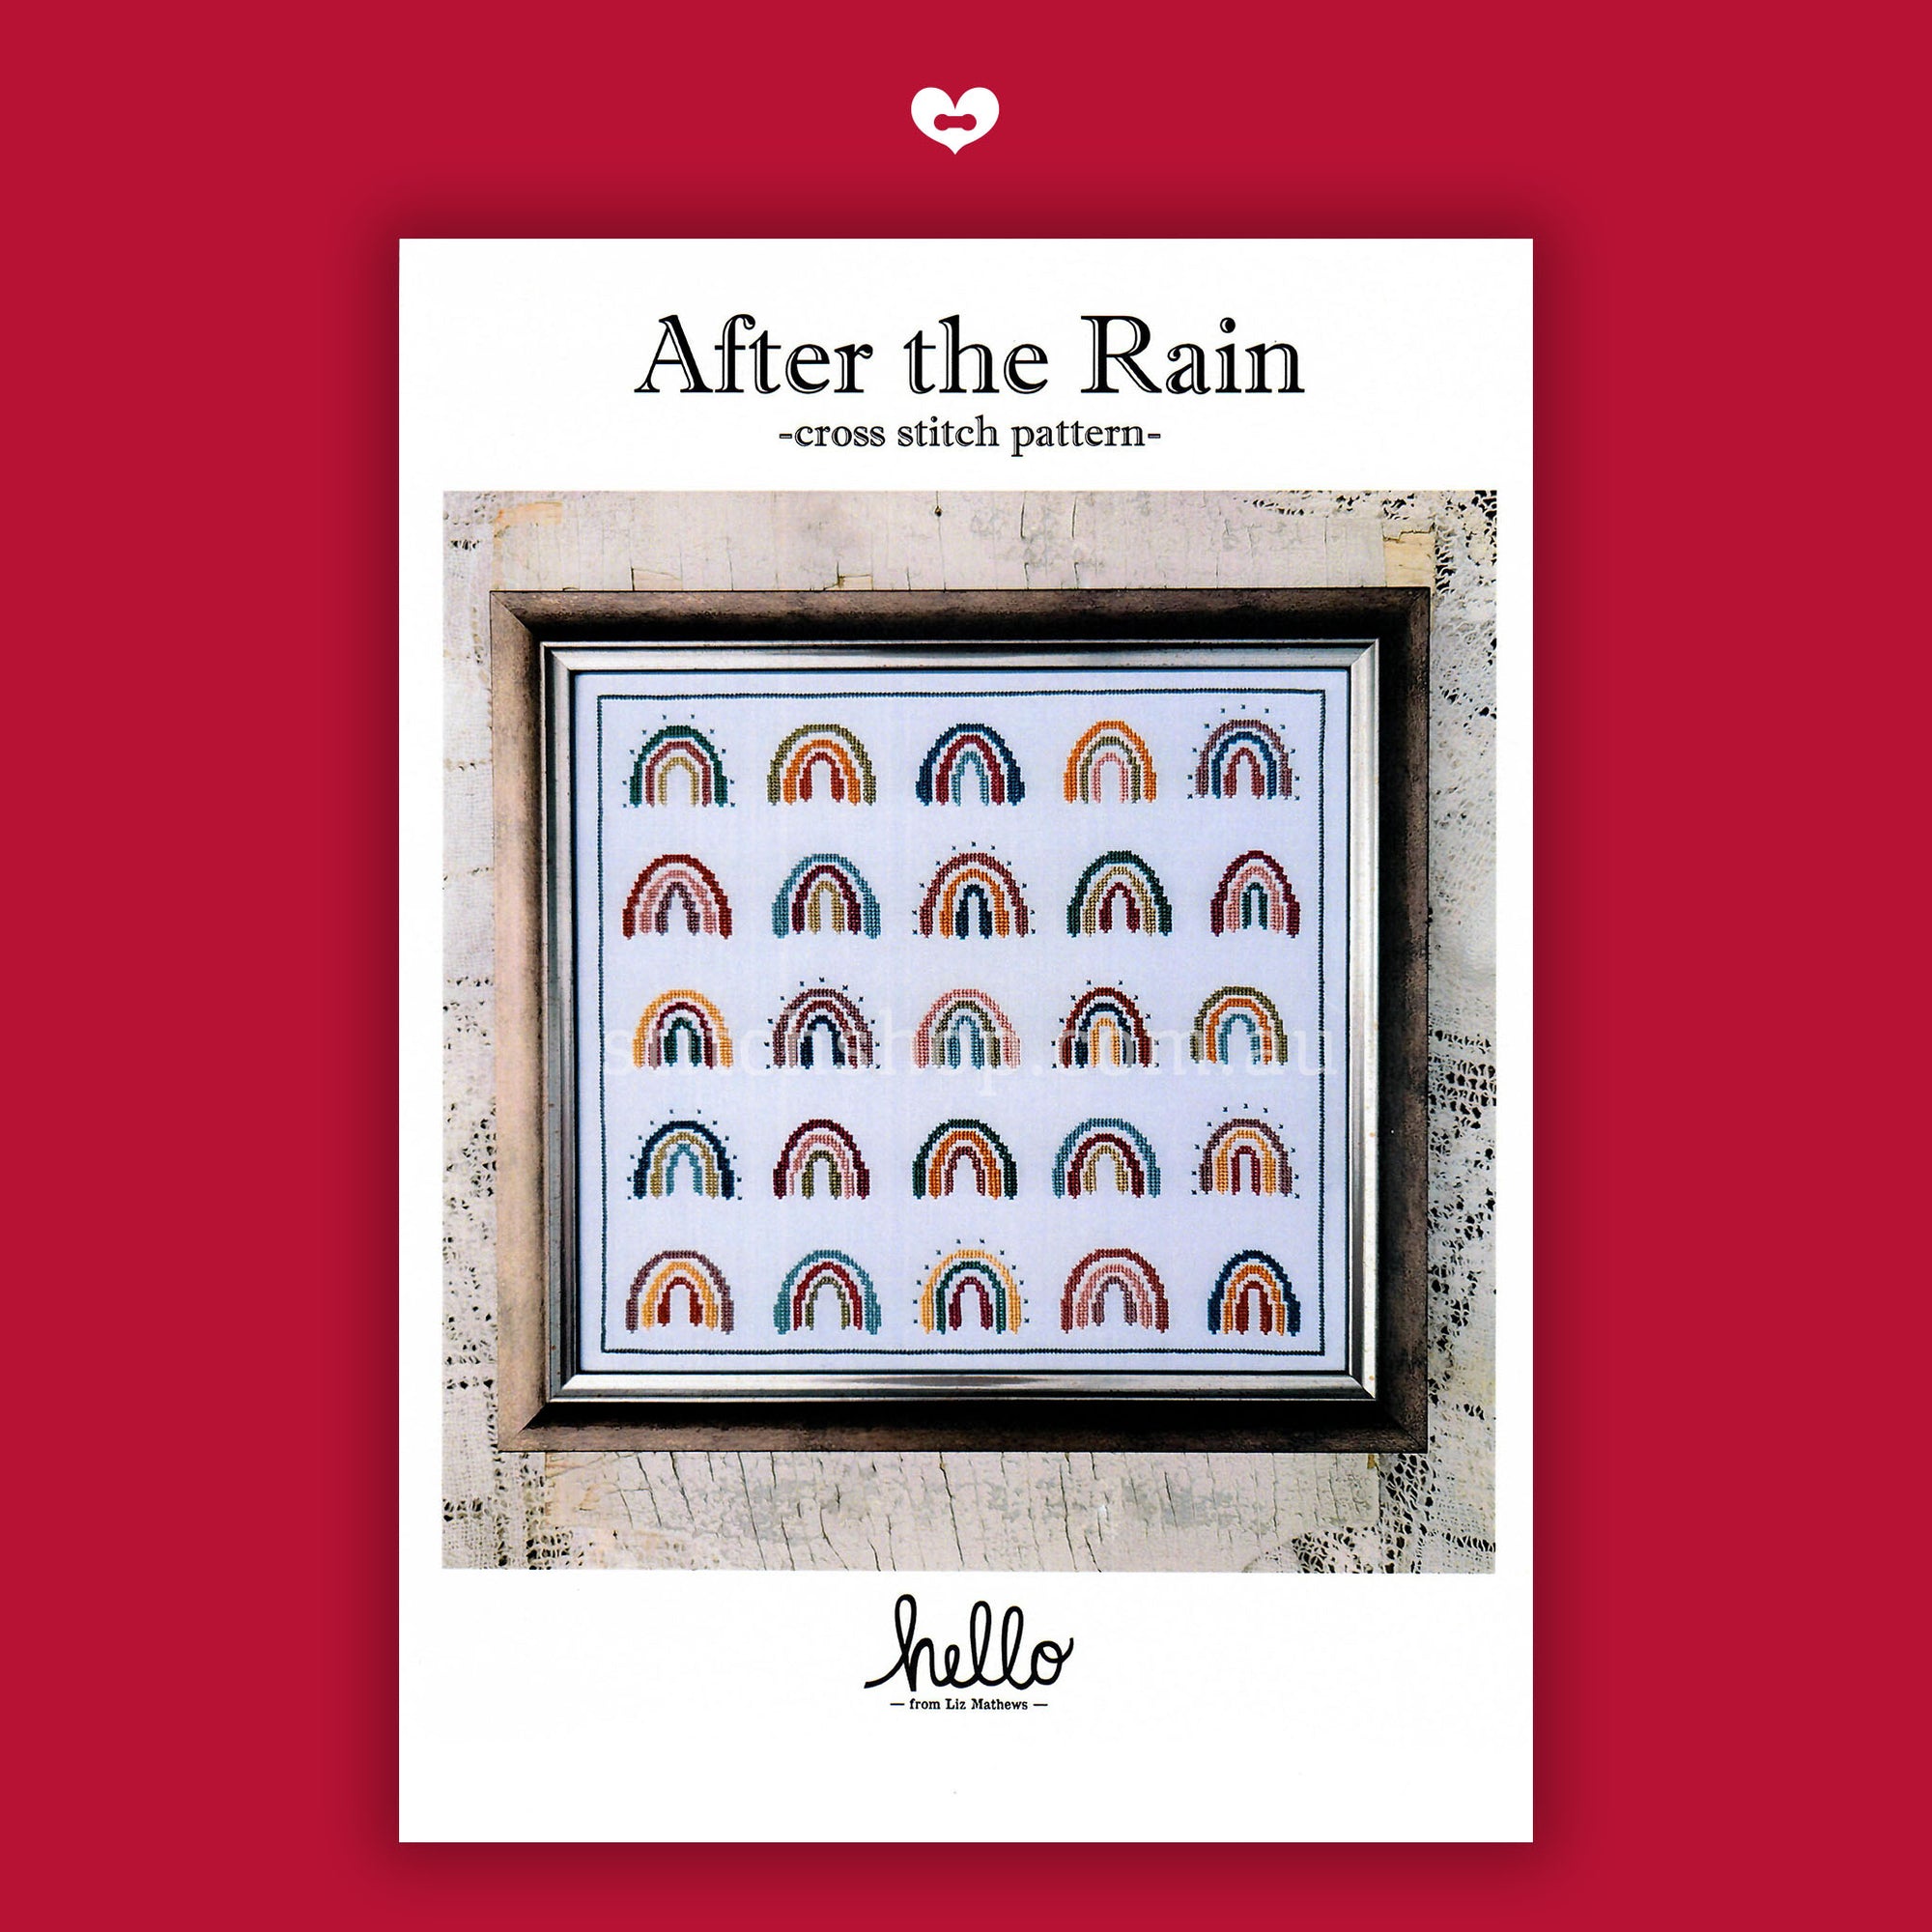 After the Rain (Hello! from Liz Matthews)